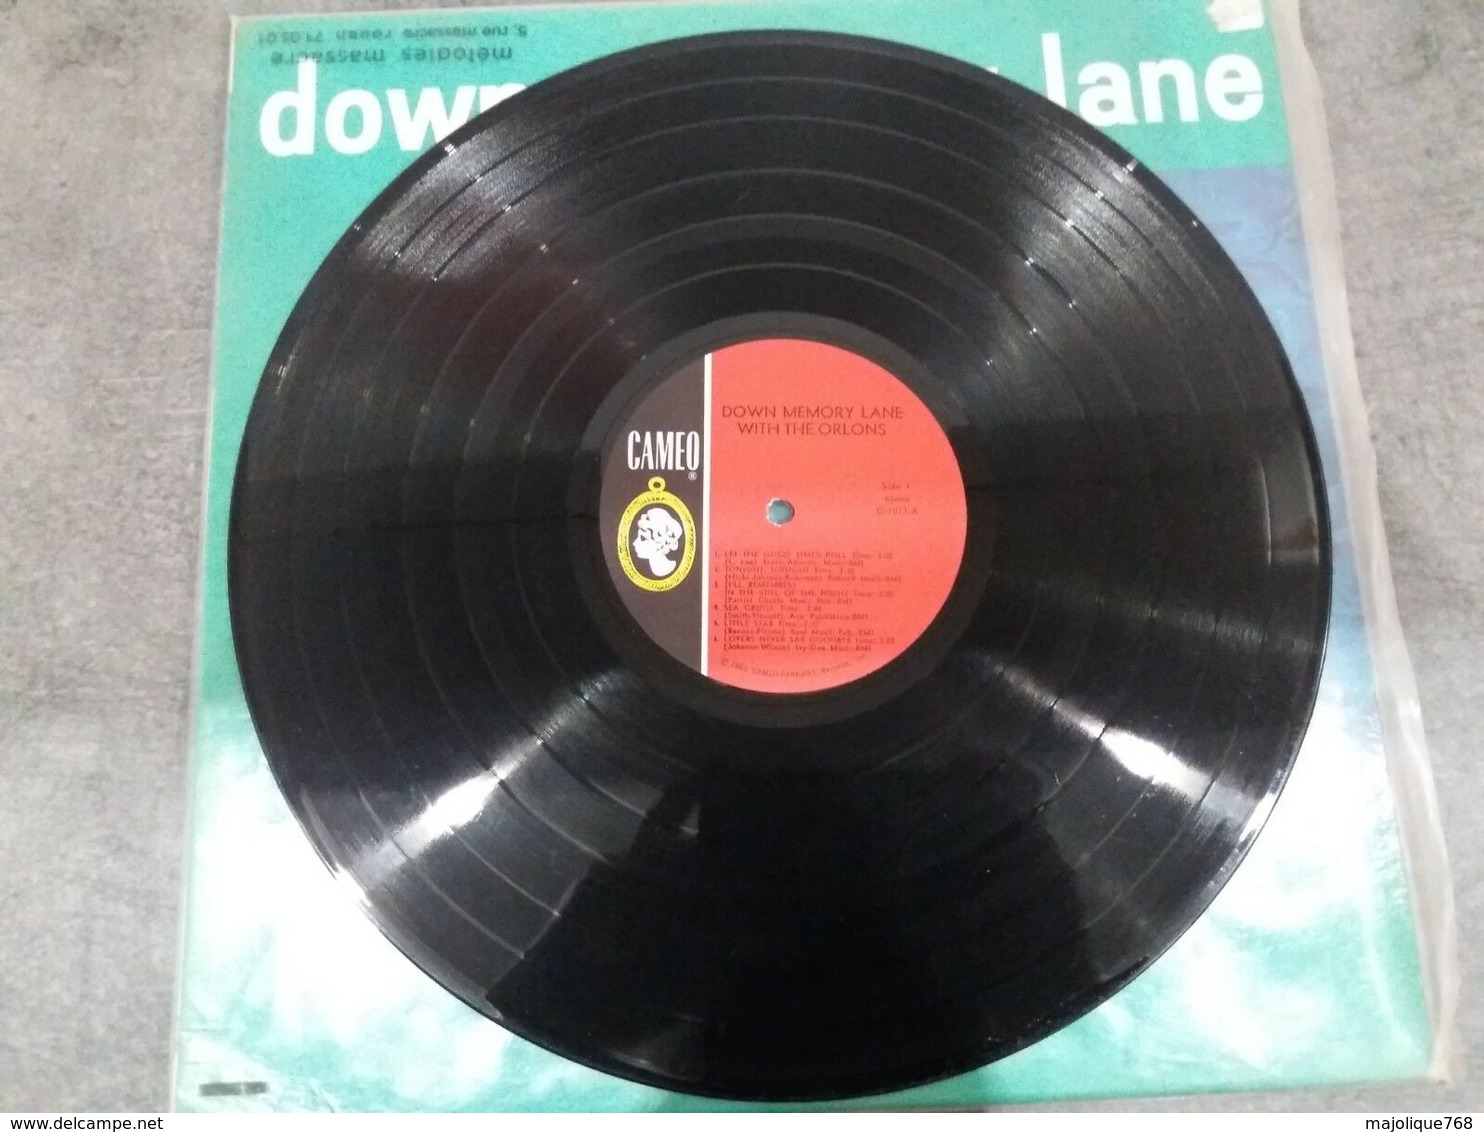 Down Memory Lane With The Orlons - Cameo C61073 - 1963 Vinyl LP Mono Original USA - - Soul - R&B